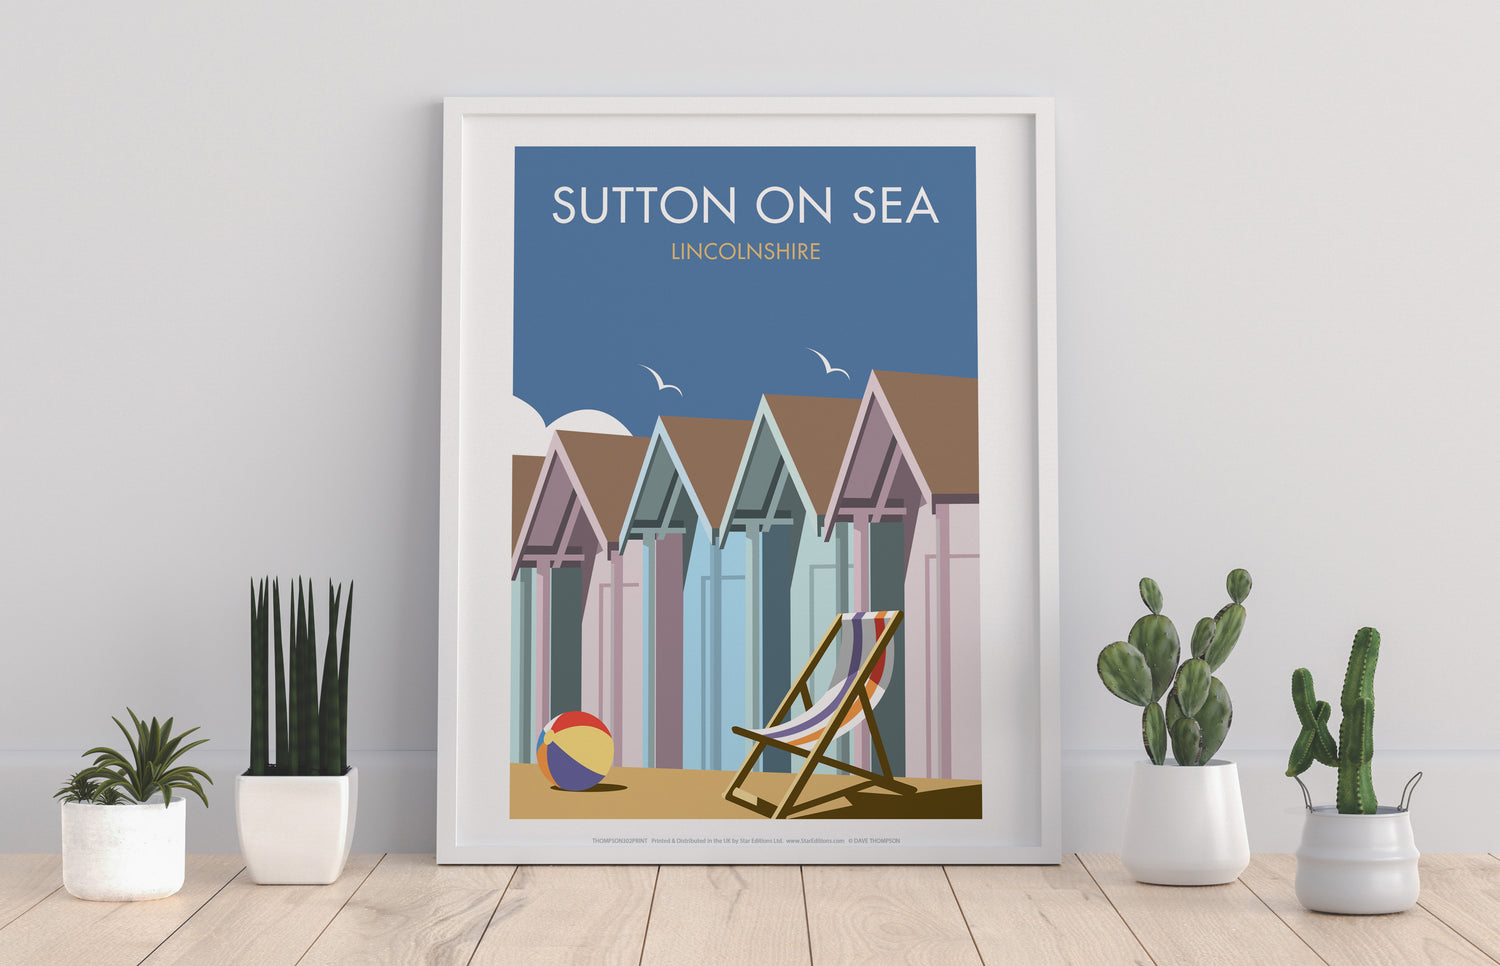 Sutton-On-Sea, Linconshire - Art Print